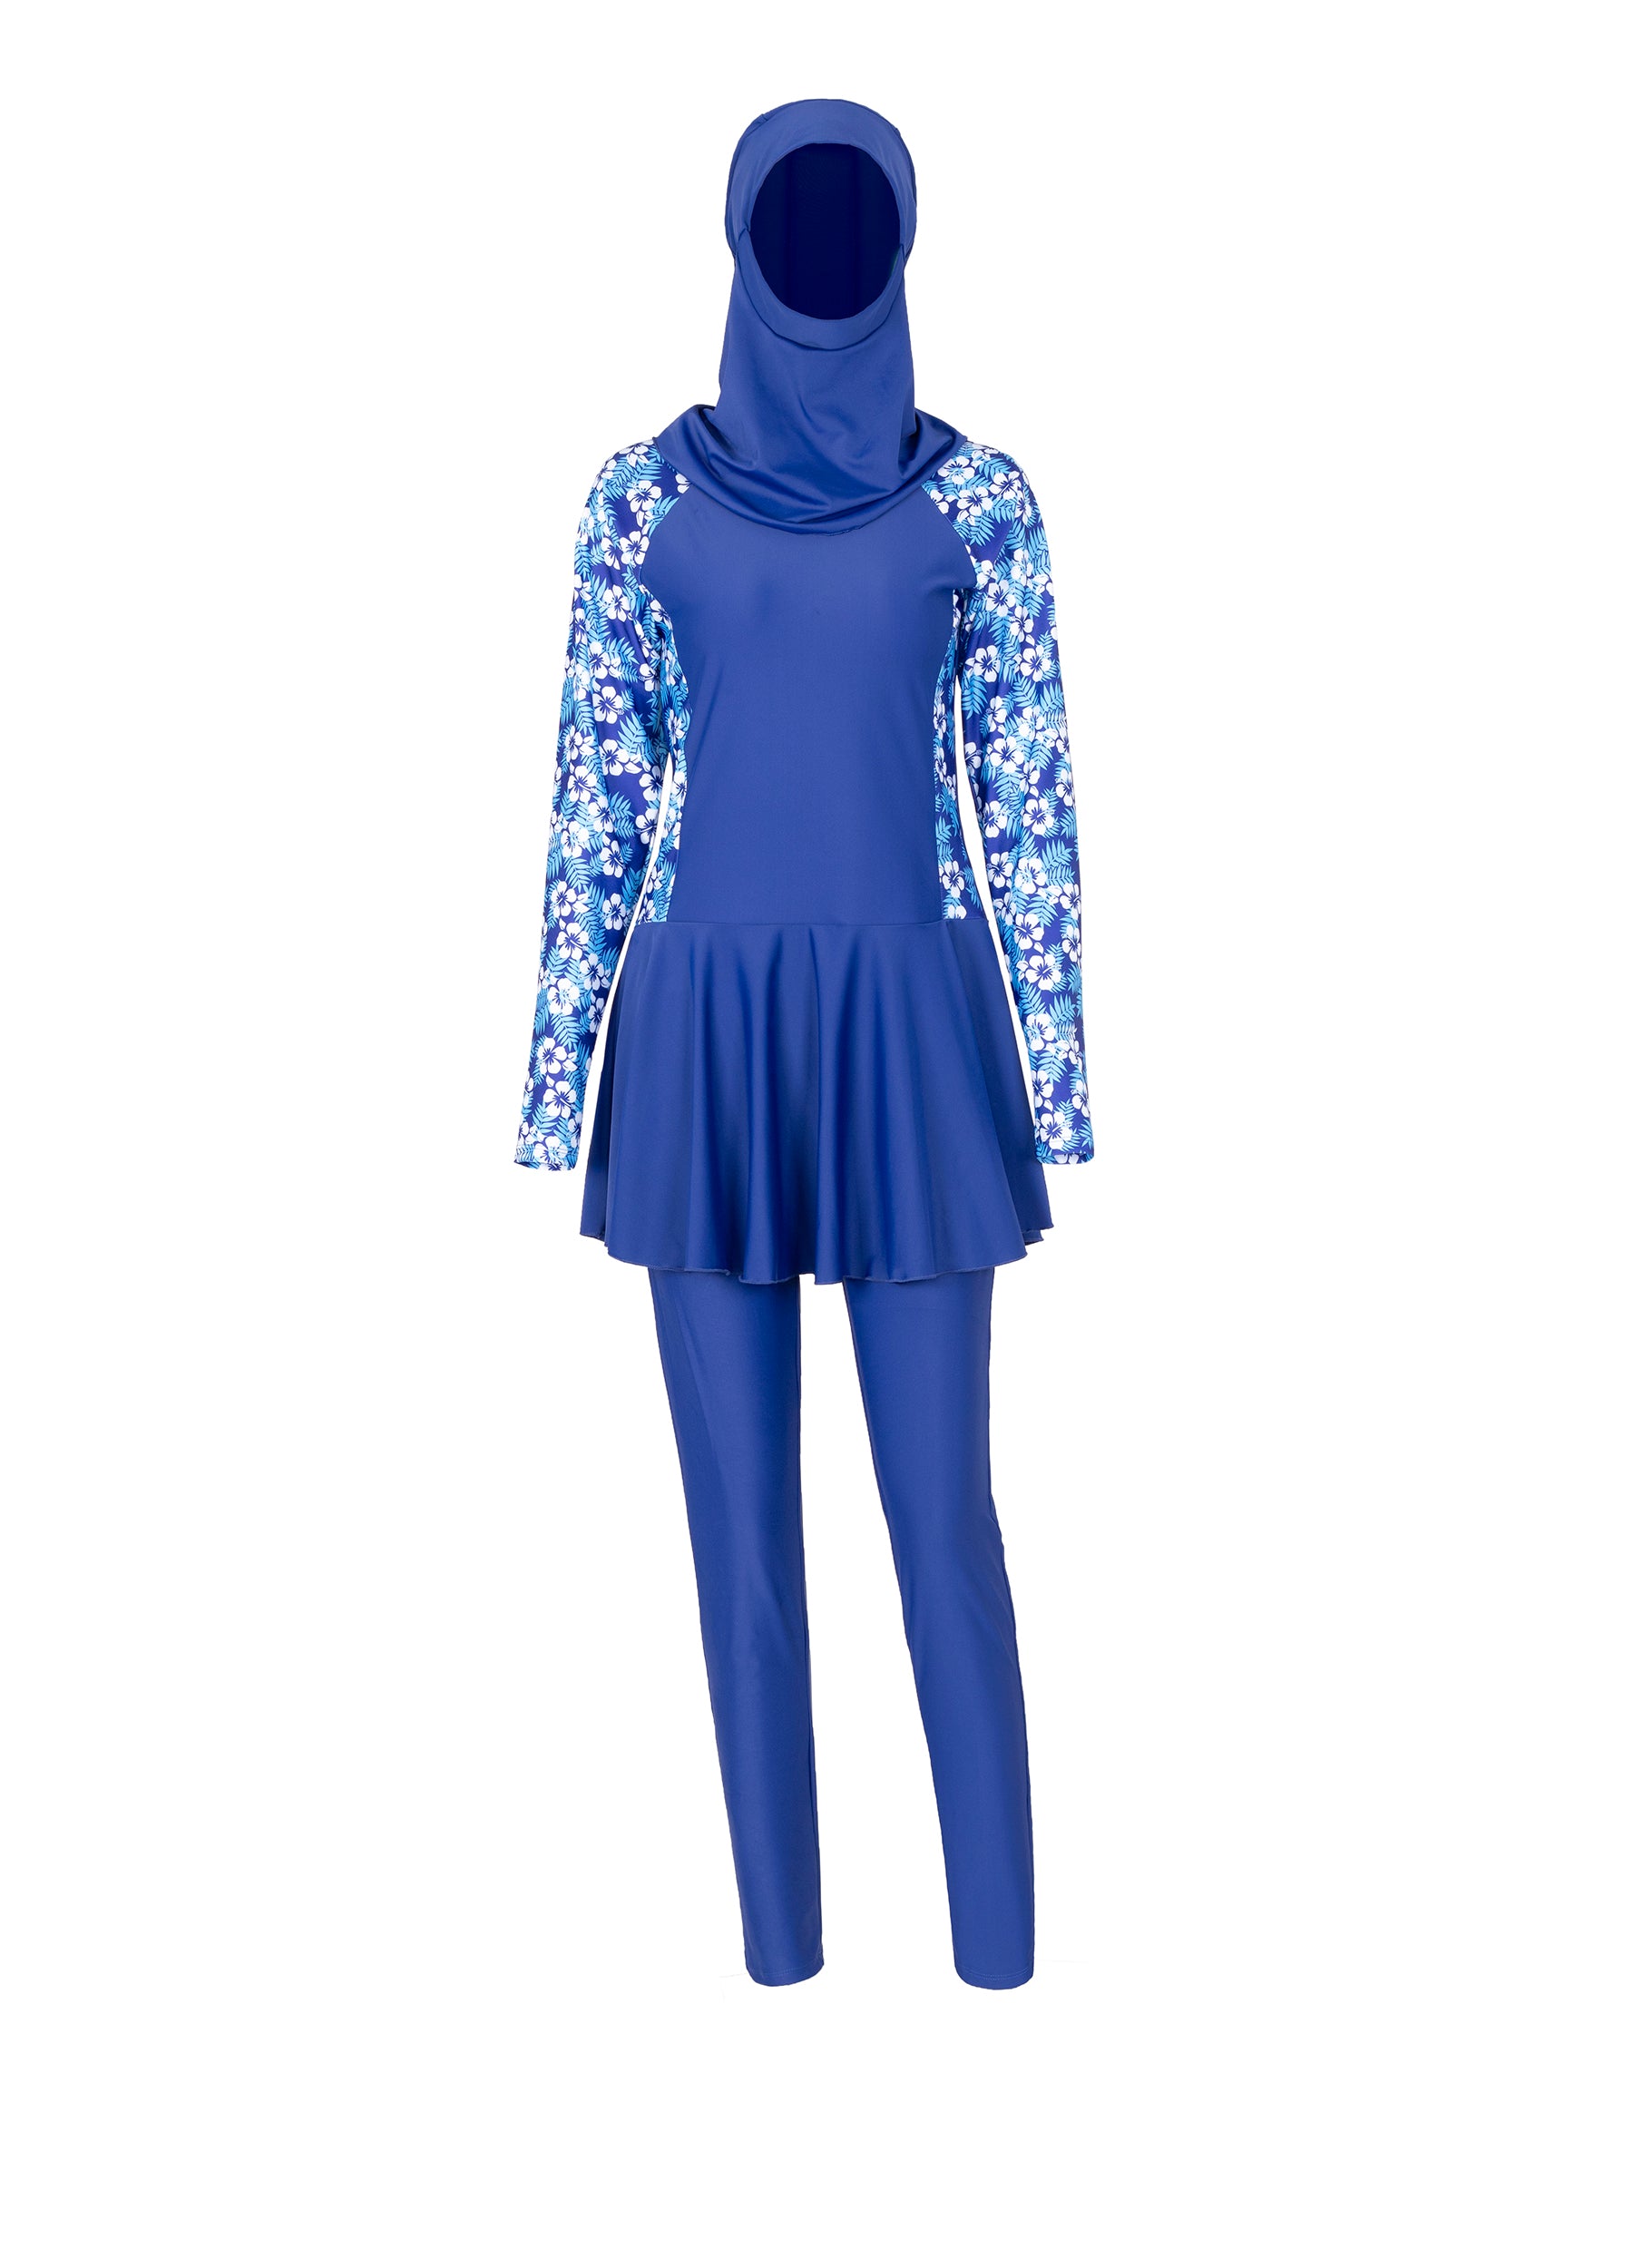 3PCS Women Full Cover Swim Costume Swimwear Islamic Muslim Swimming Burkini  Suit